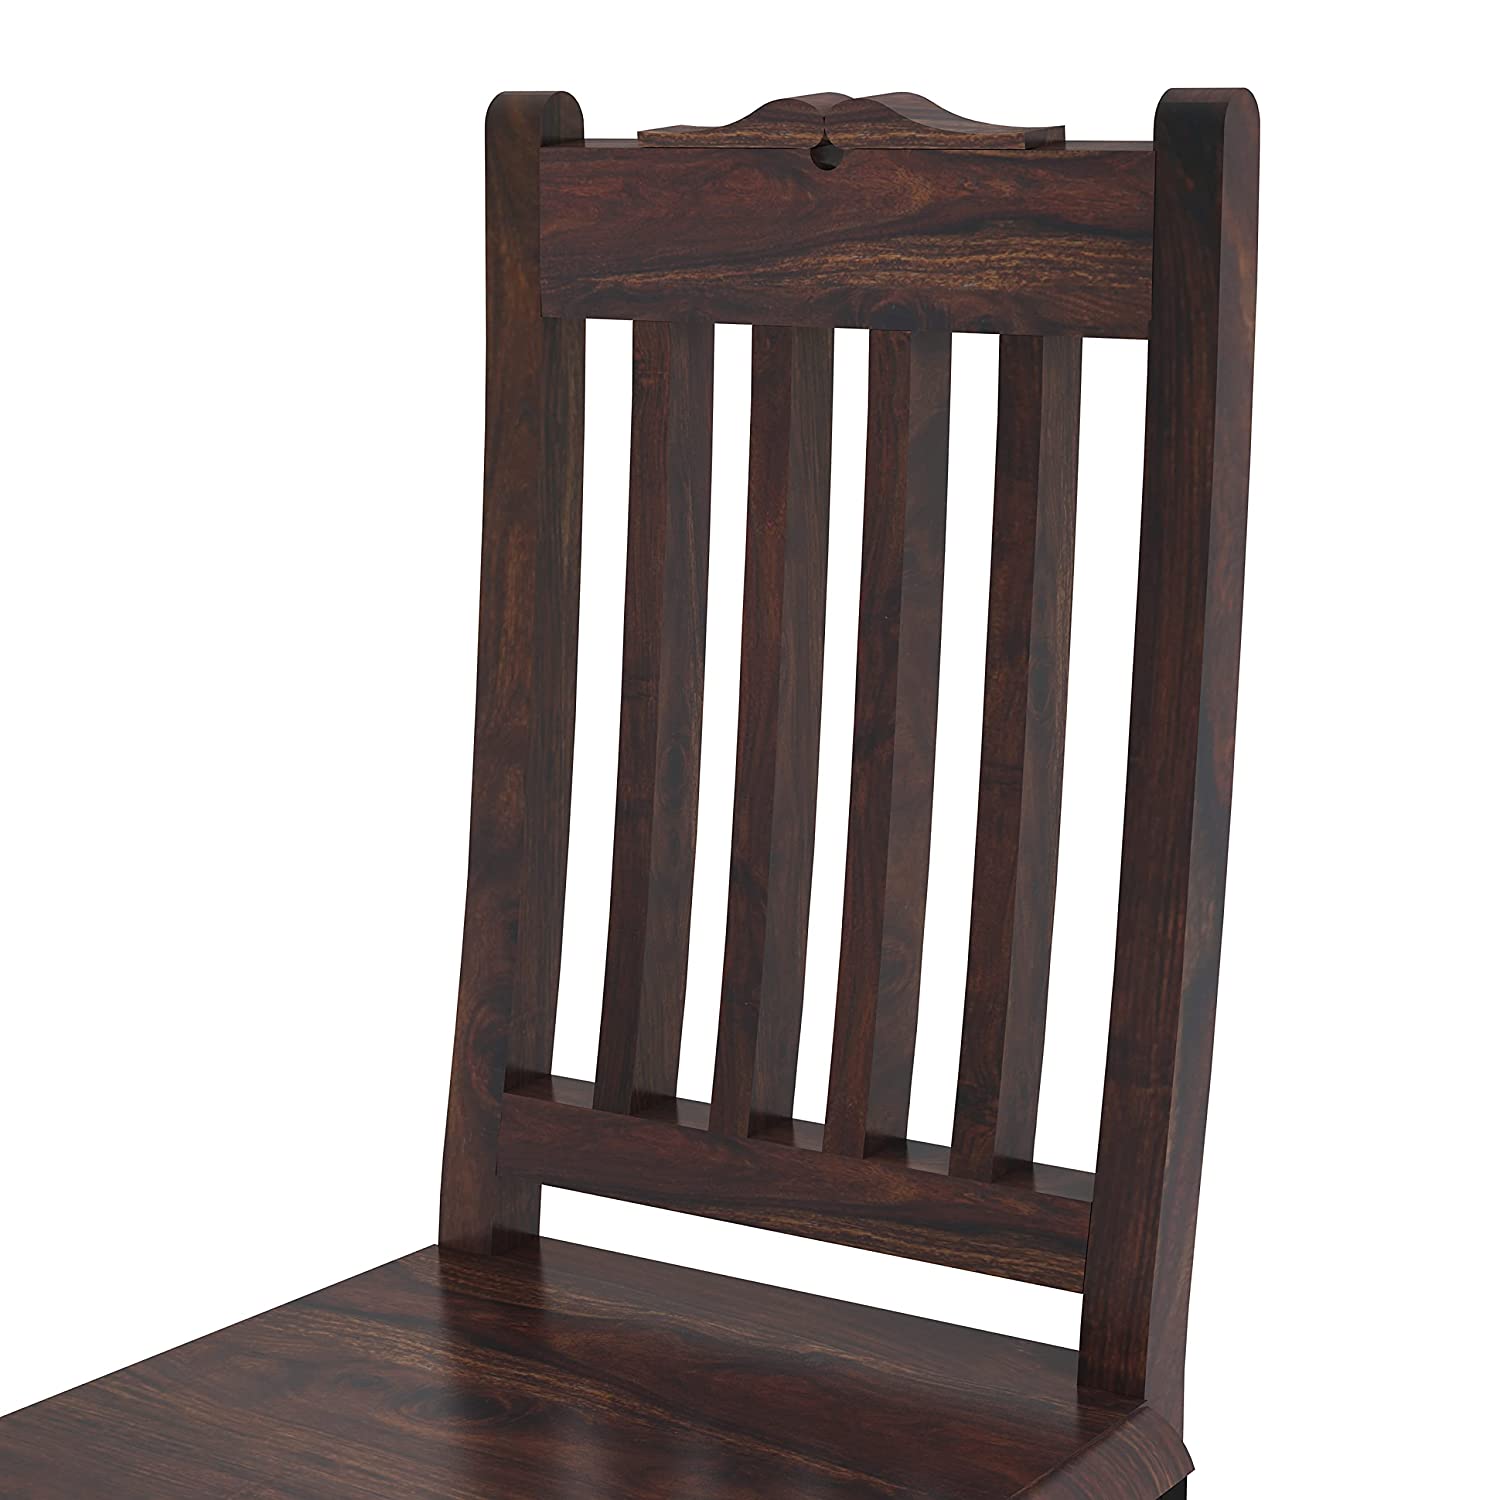 Ajmer Solid Sheesham Wood Chair (Walnut Finish)